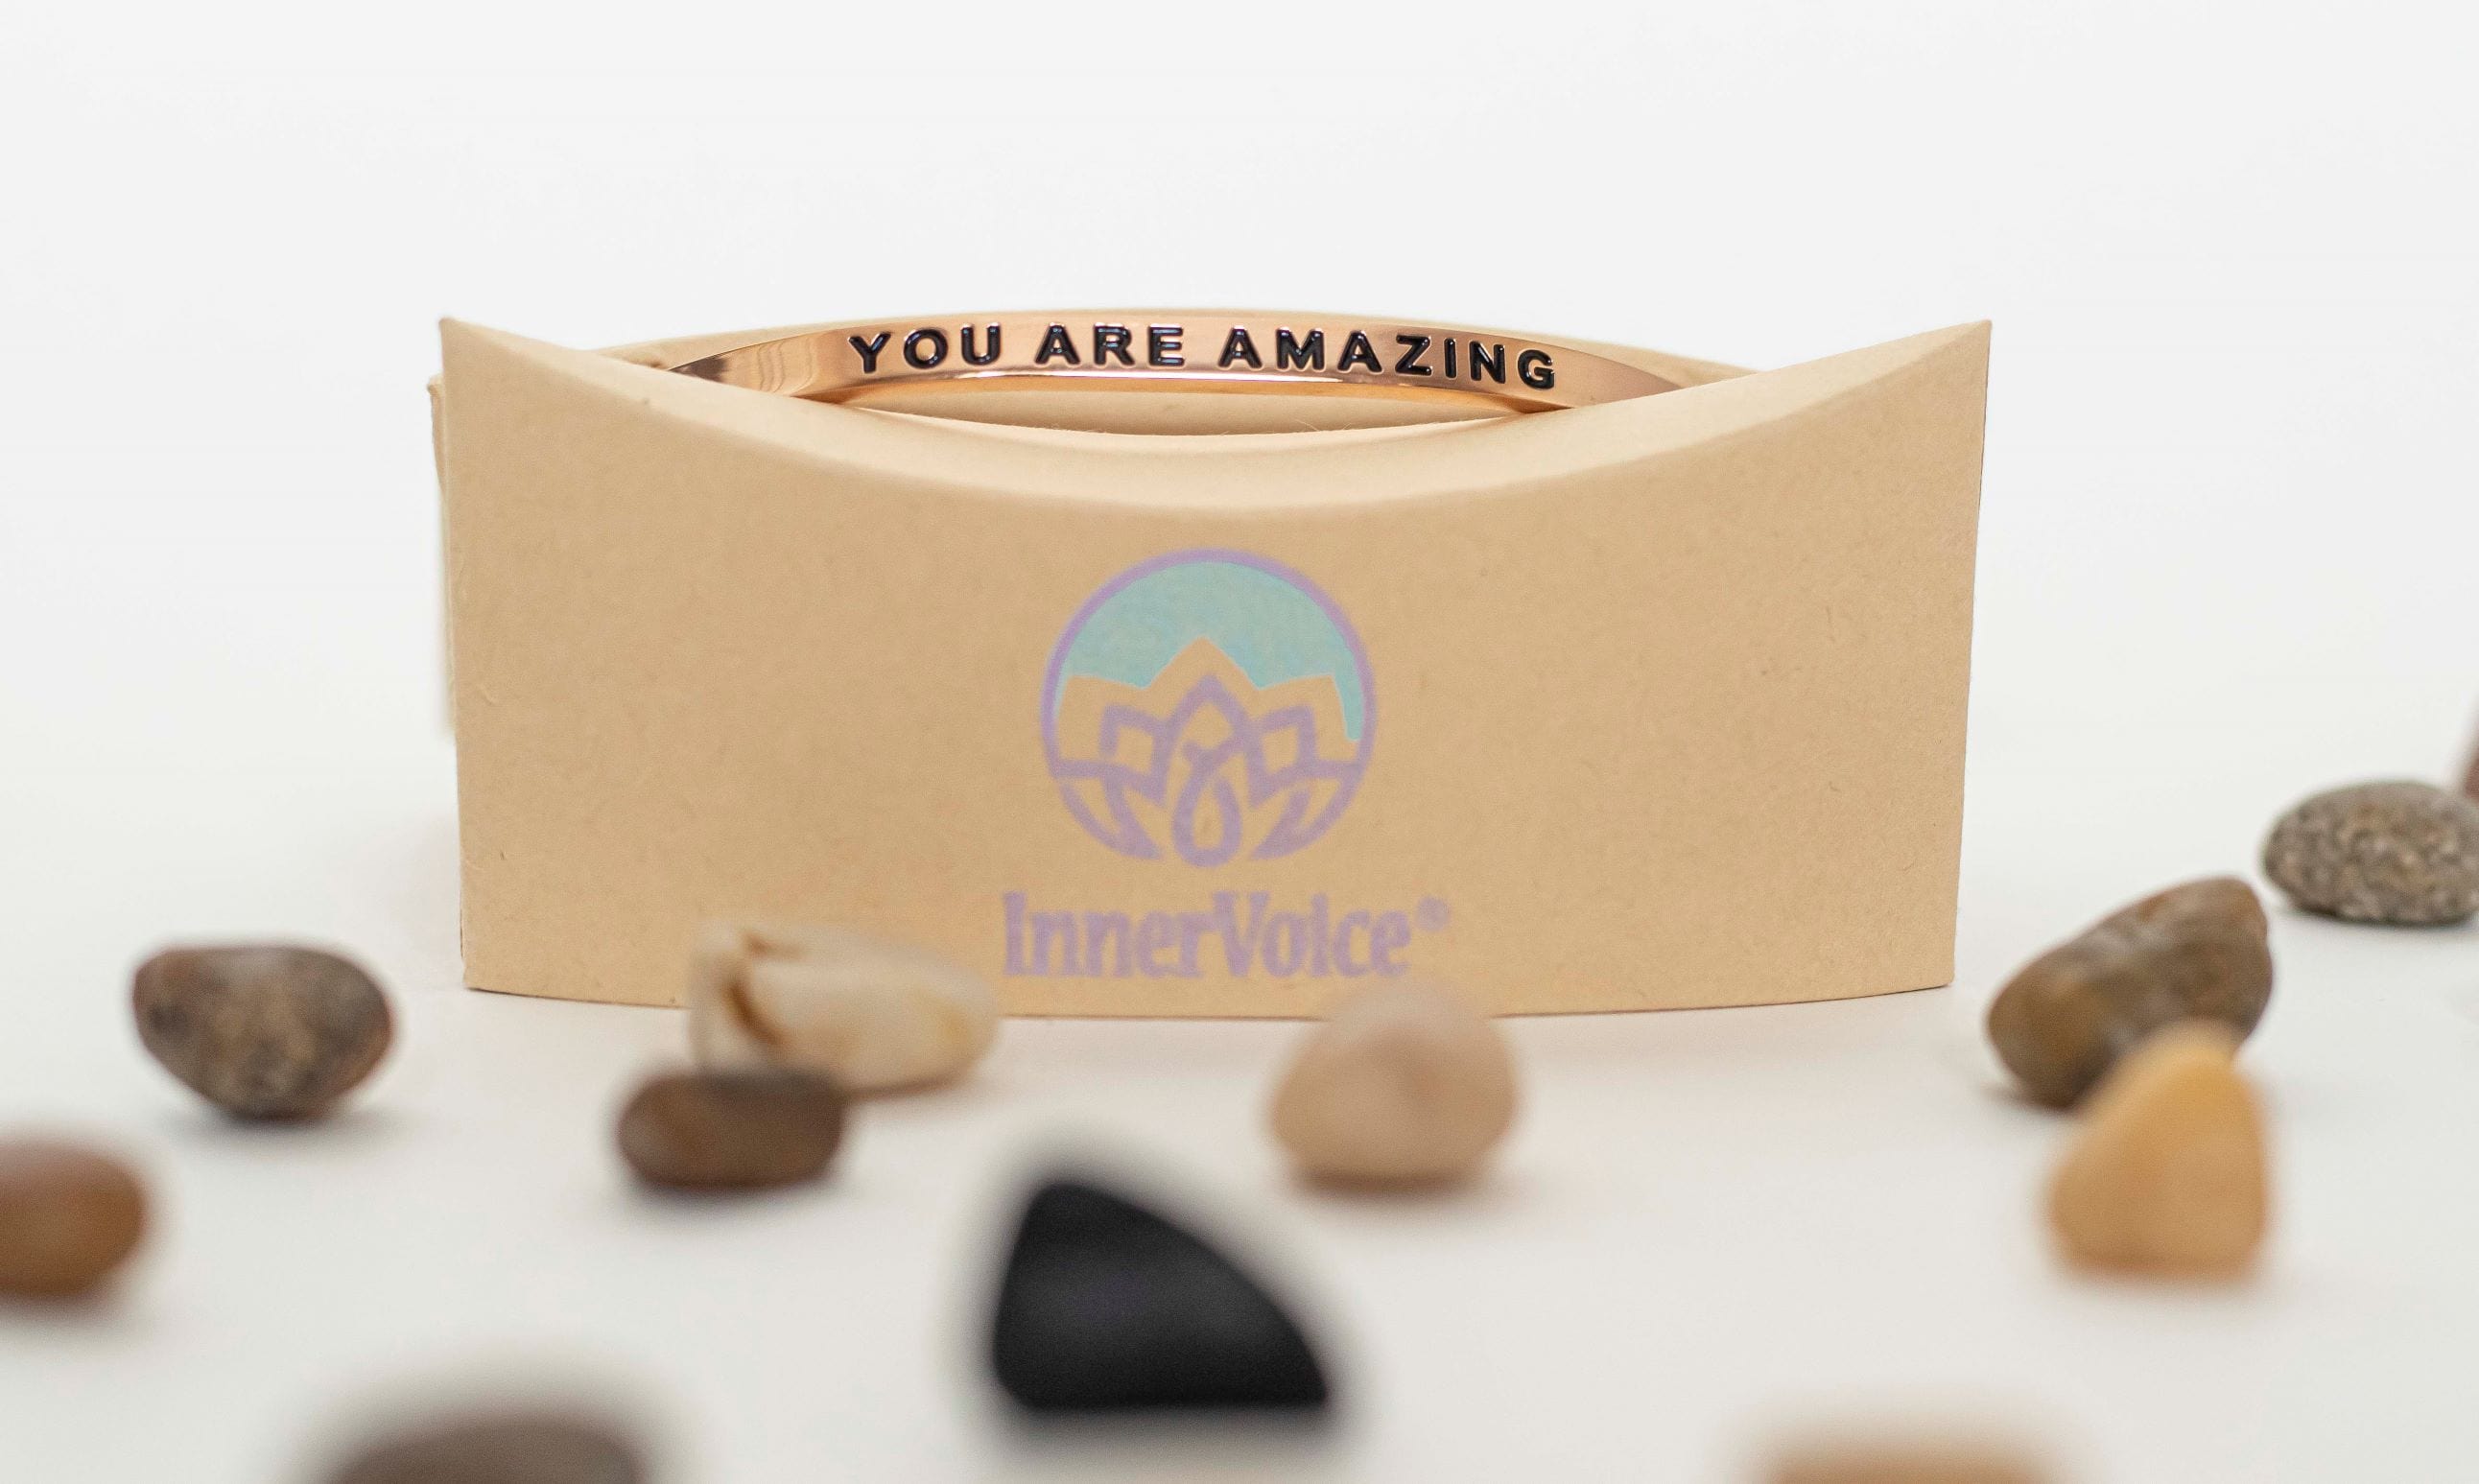 You Are Amazing: InnerVoice Bracelet